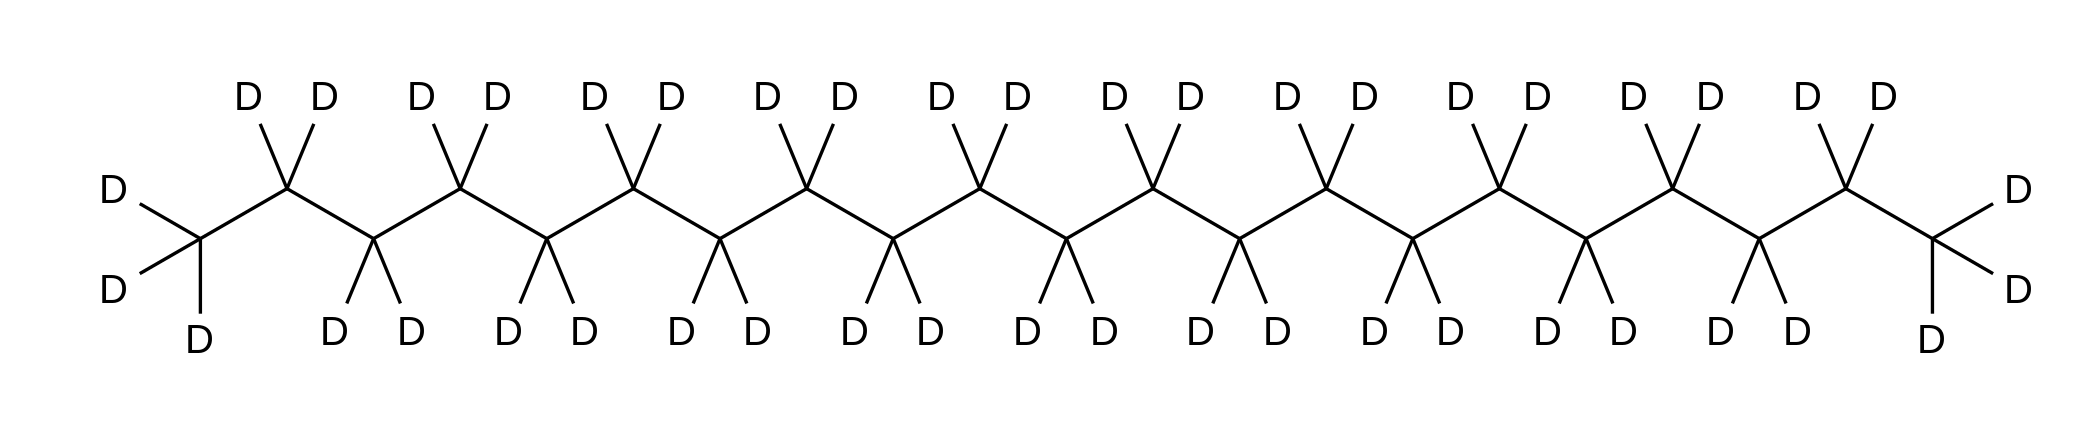 n-Heneicosane-d<sub>44</sub>